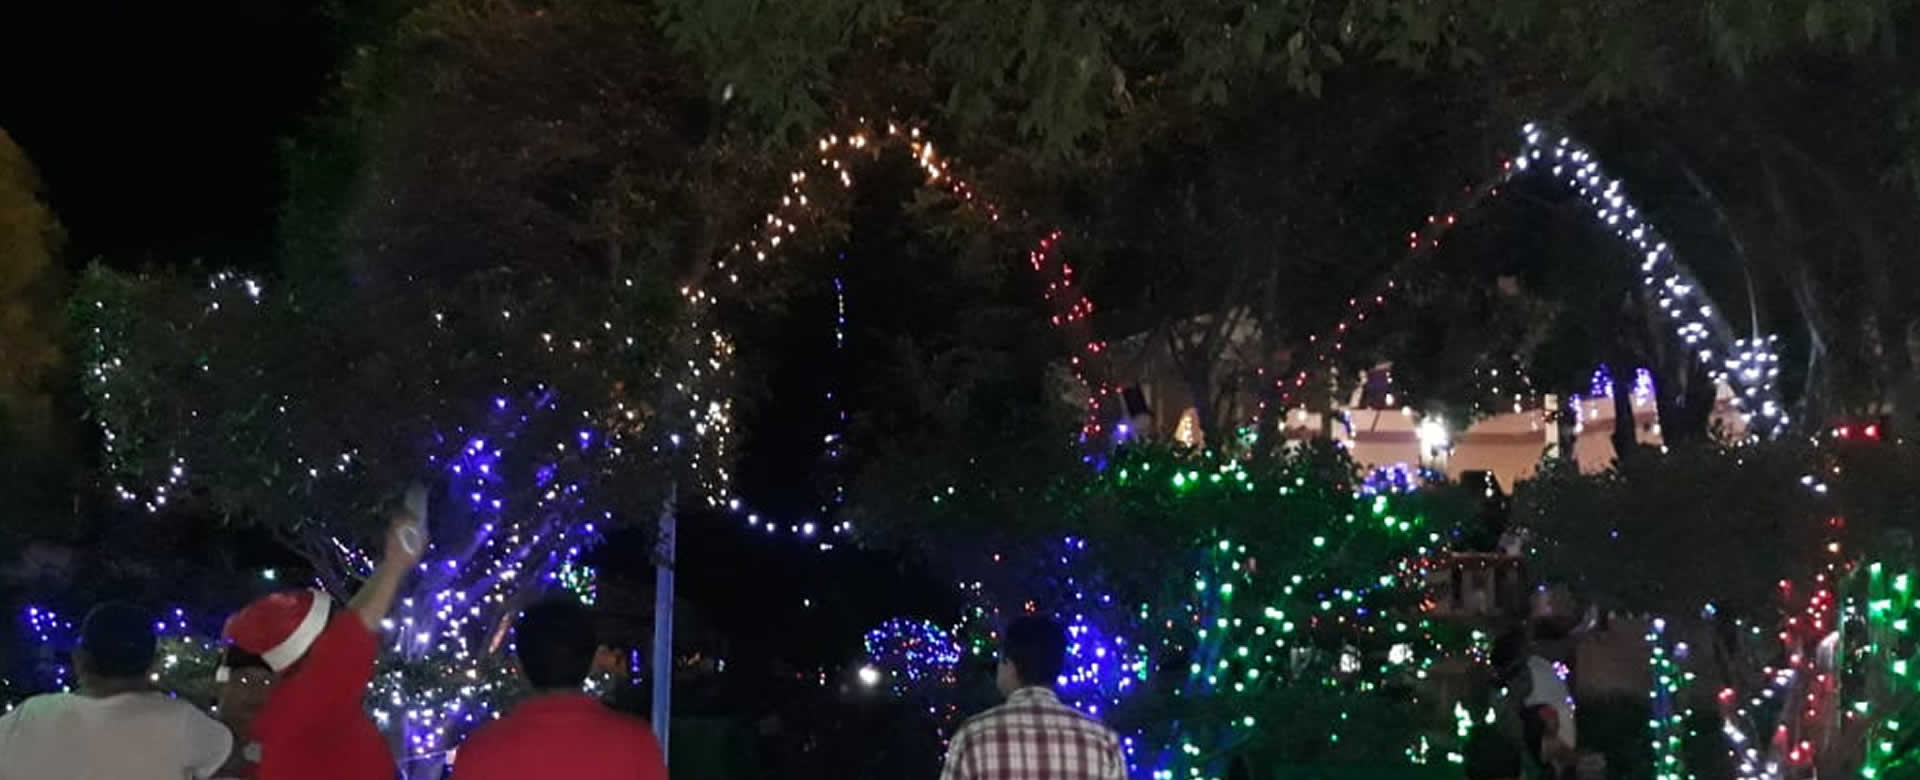 Ya llegó la navidad para las familias de Juigalpa, Chontales